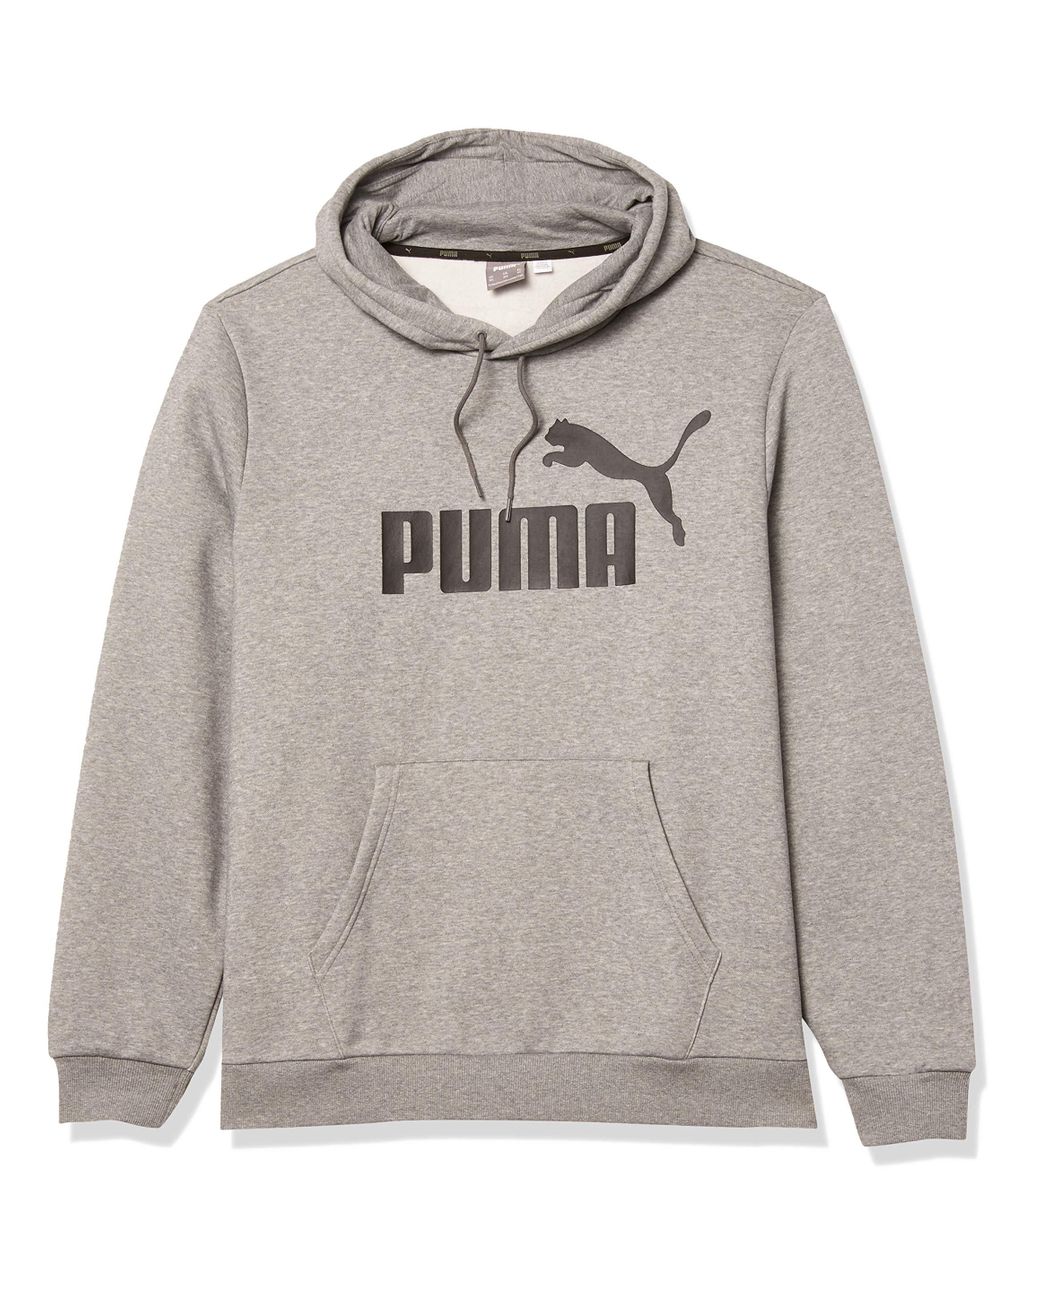 PUMA Cotton Essentials Big Logo Full Zip Hoodie in Gray for Men - Save ...